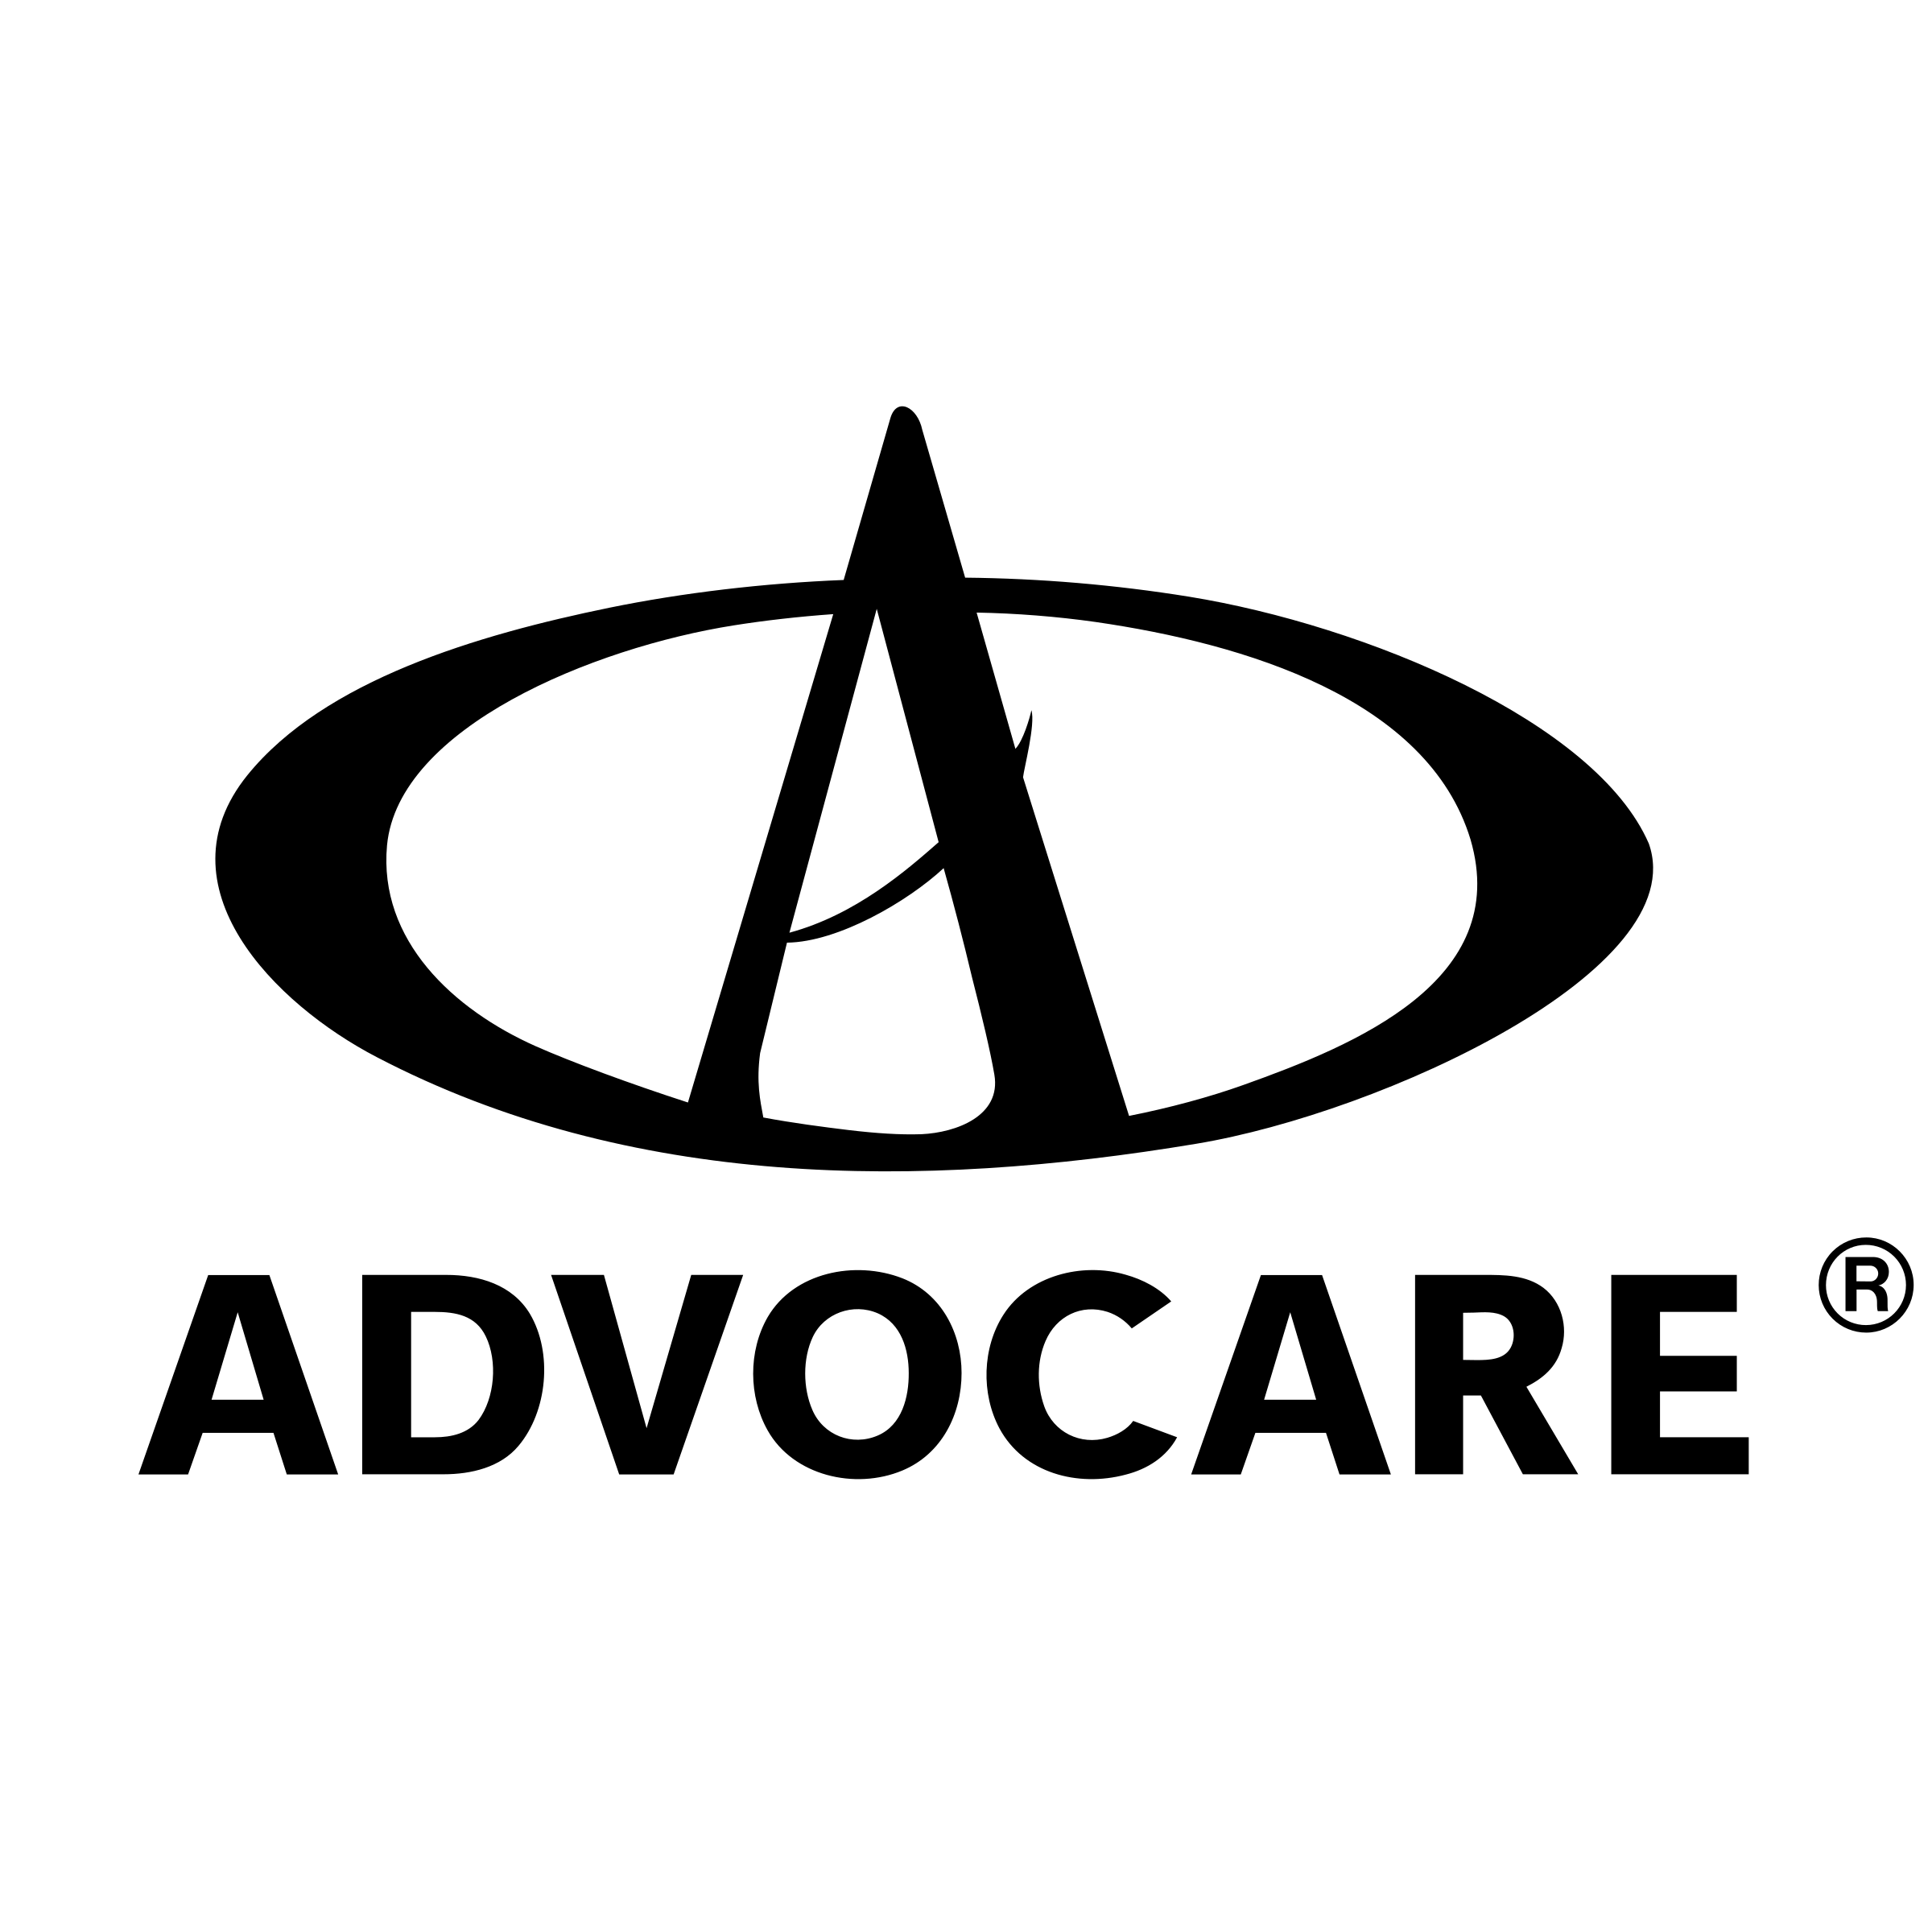 Blue and White AdvoCare Logo - Advocare 01 Logo PNG Transparent & SVG Vector - Freebie Supply